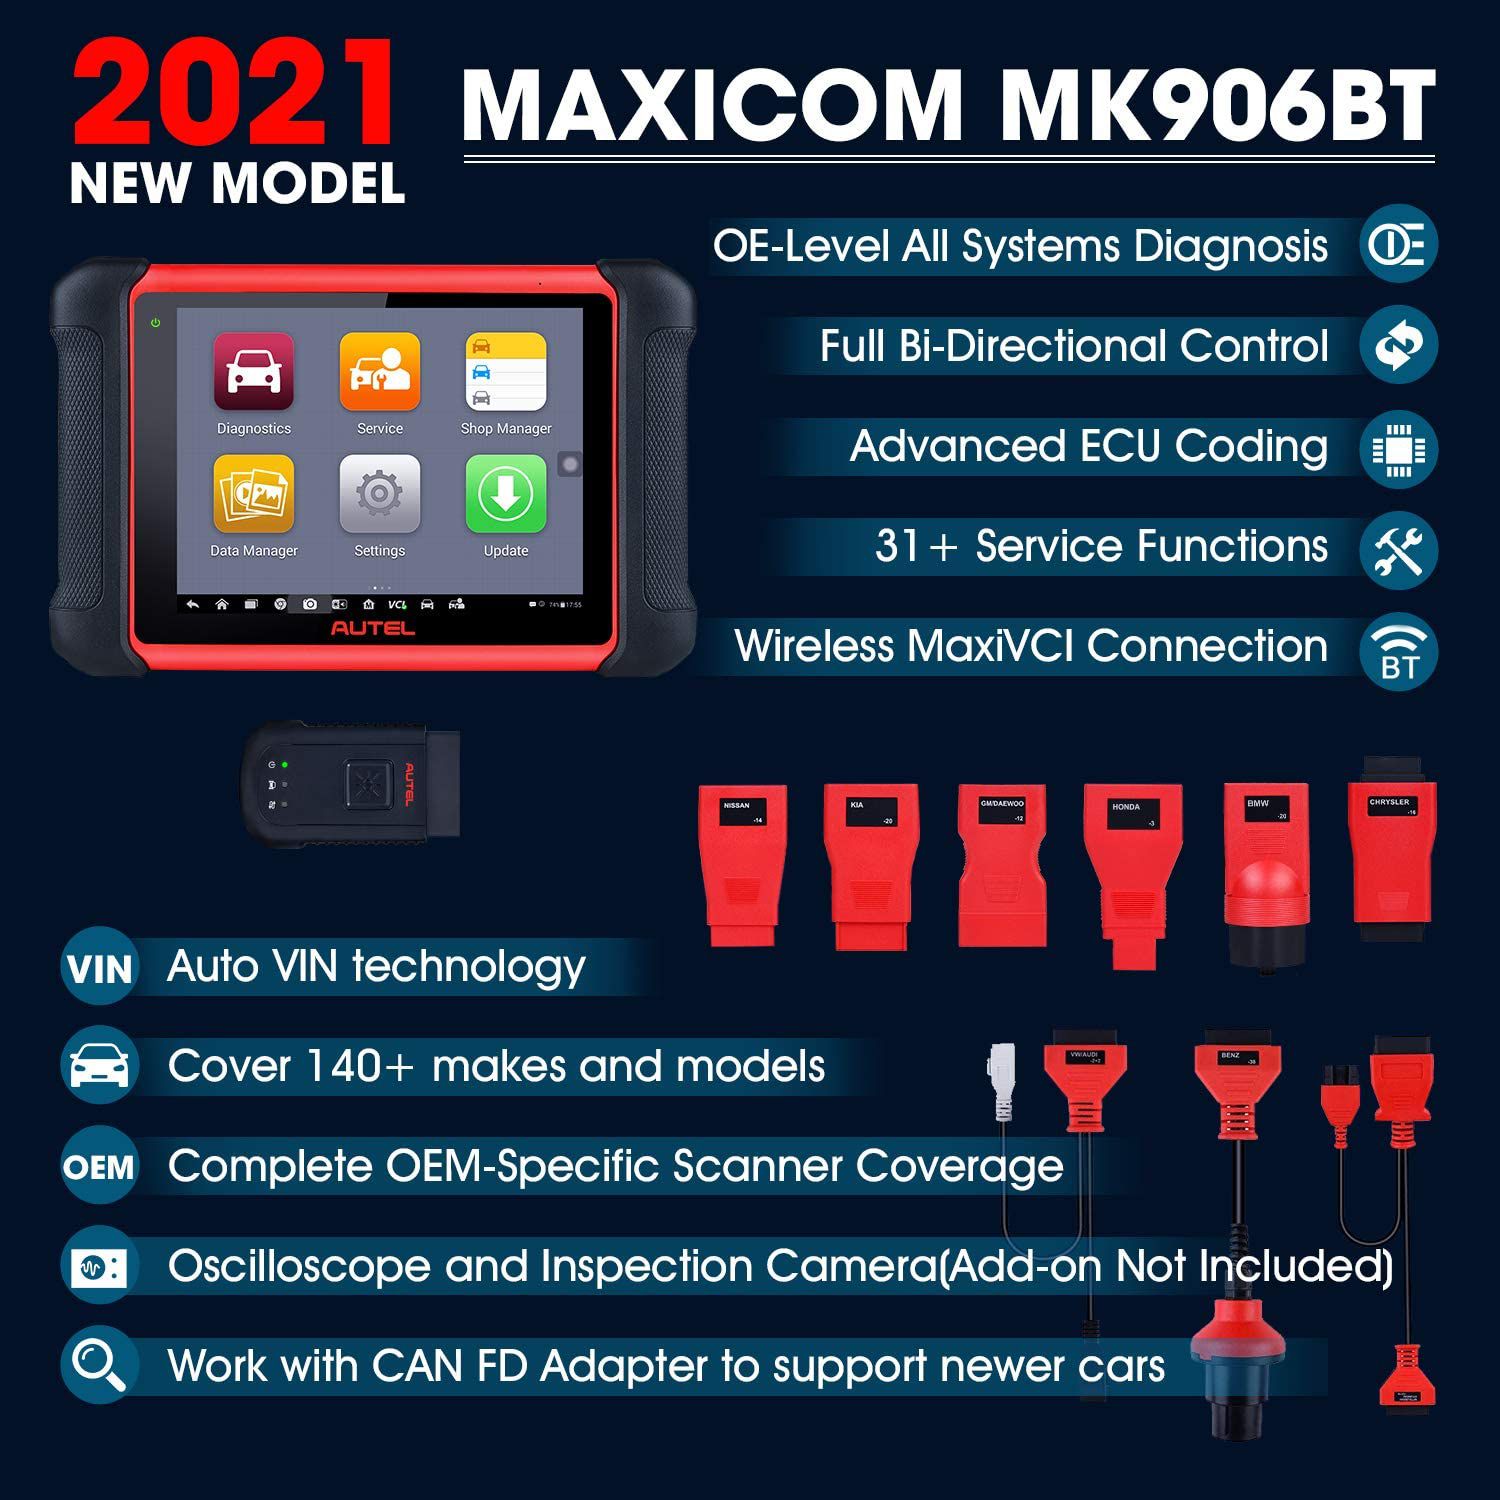 Autel MaxiCOM MK906BT诊断工具蓝牙扫描仪